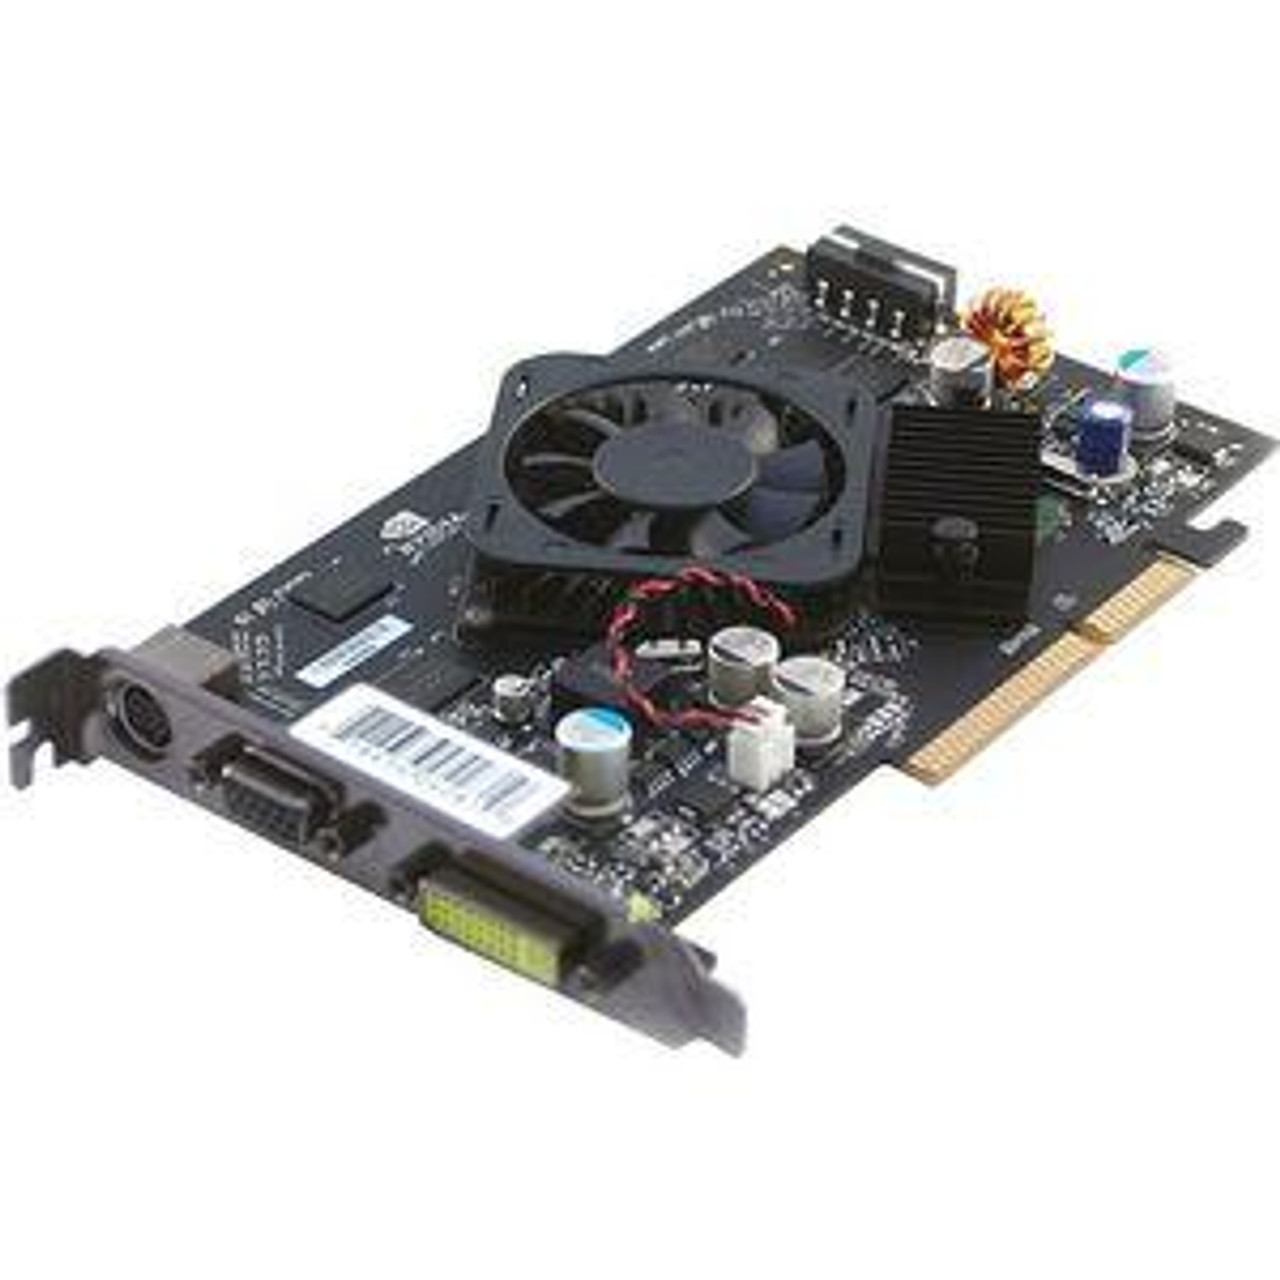 PV-T73K-UAL3 XFX GeForce 7600GS 256MB 128-Bit Video Graphics Card